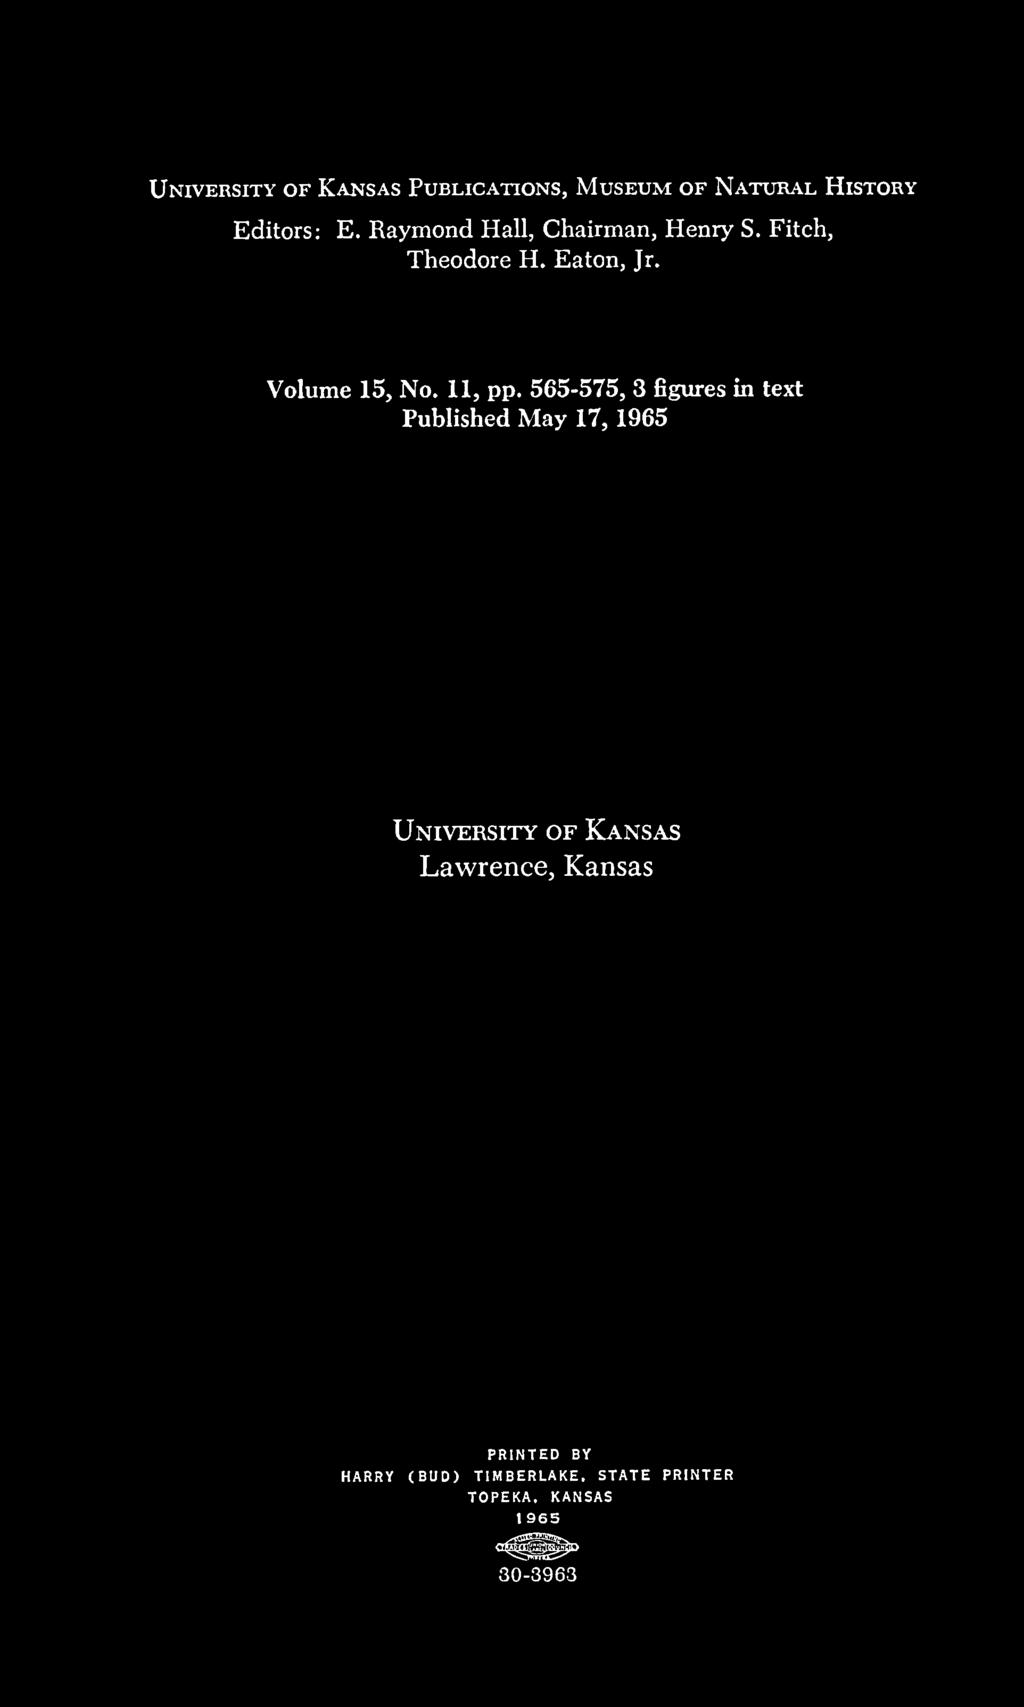 University of Kansas Lawrence, Kansas PRINTED BY